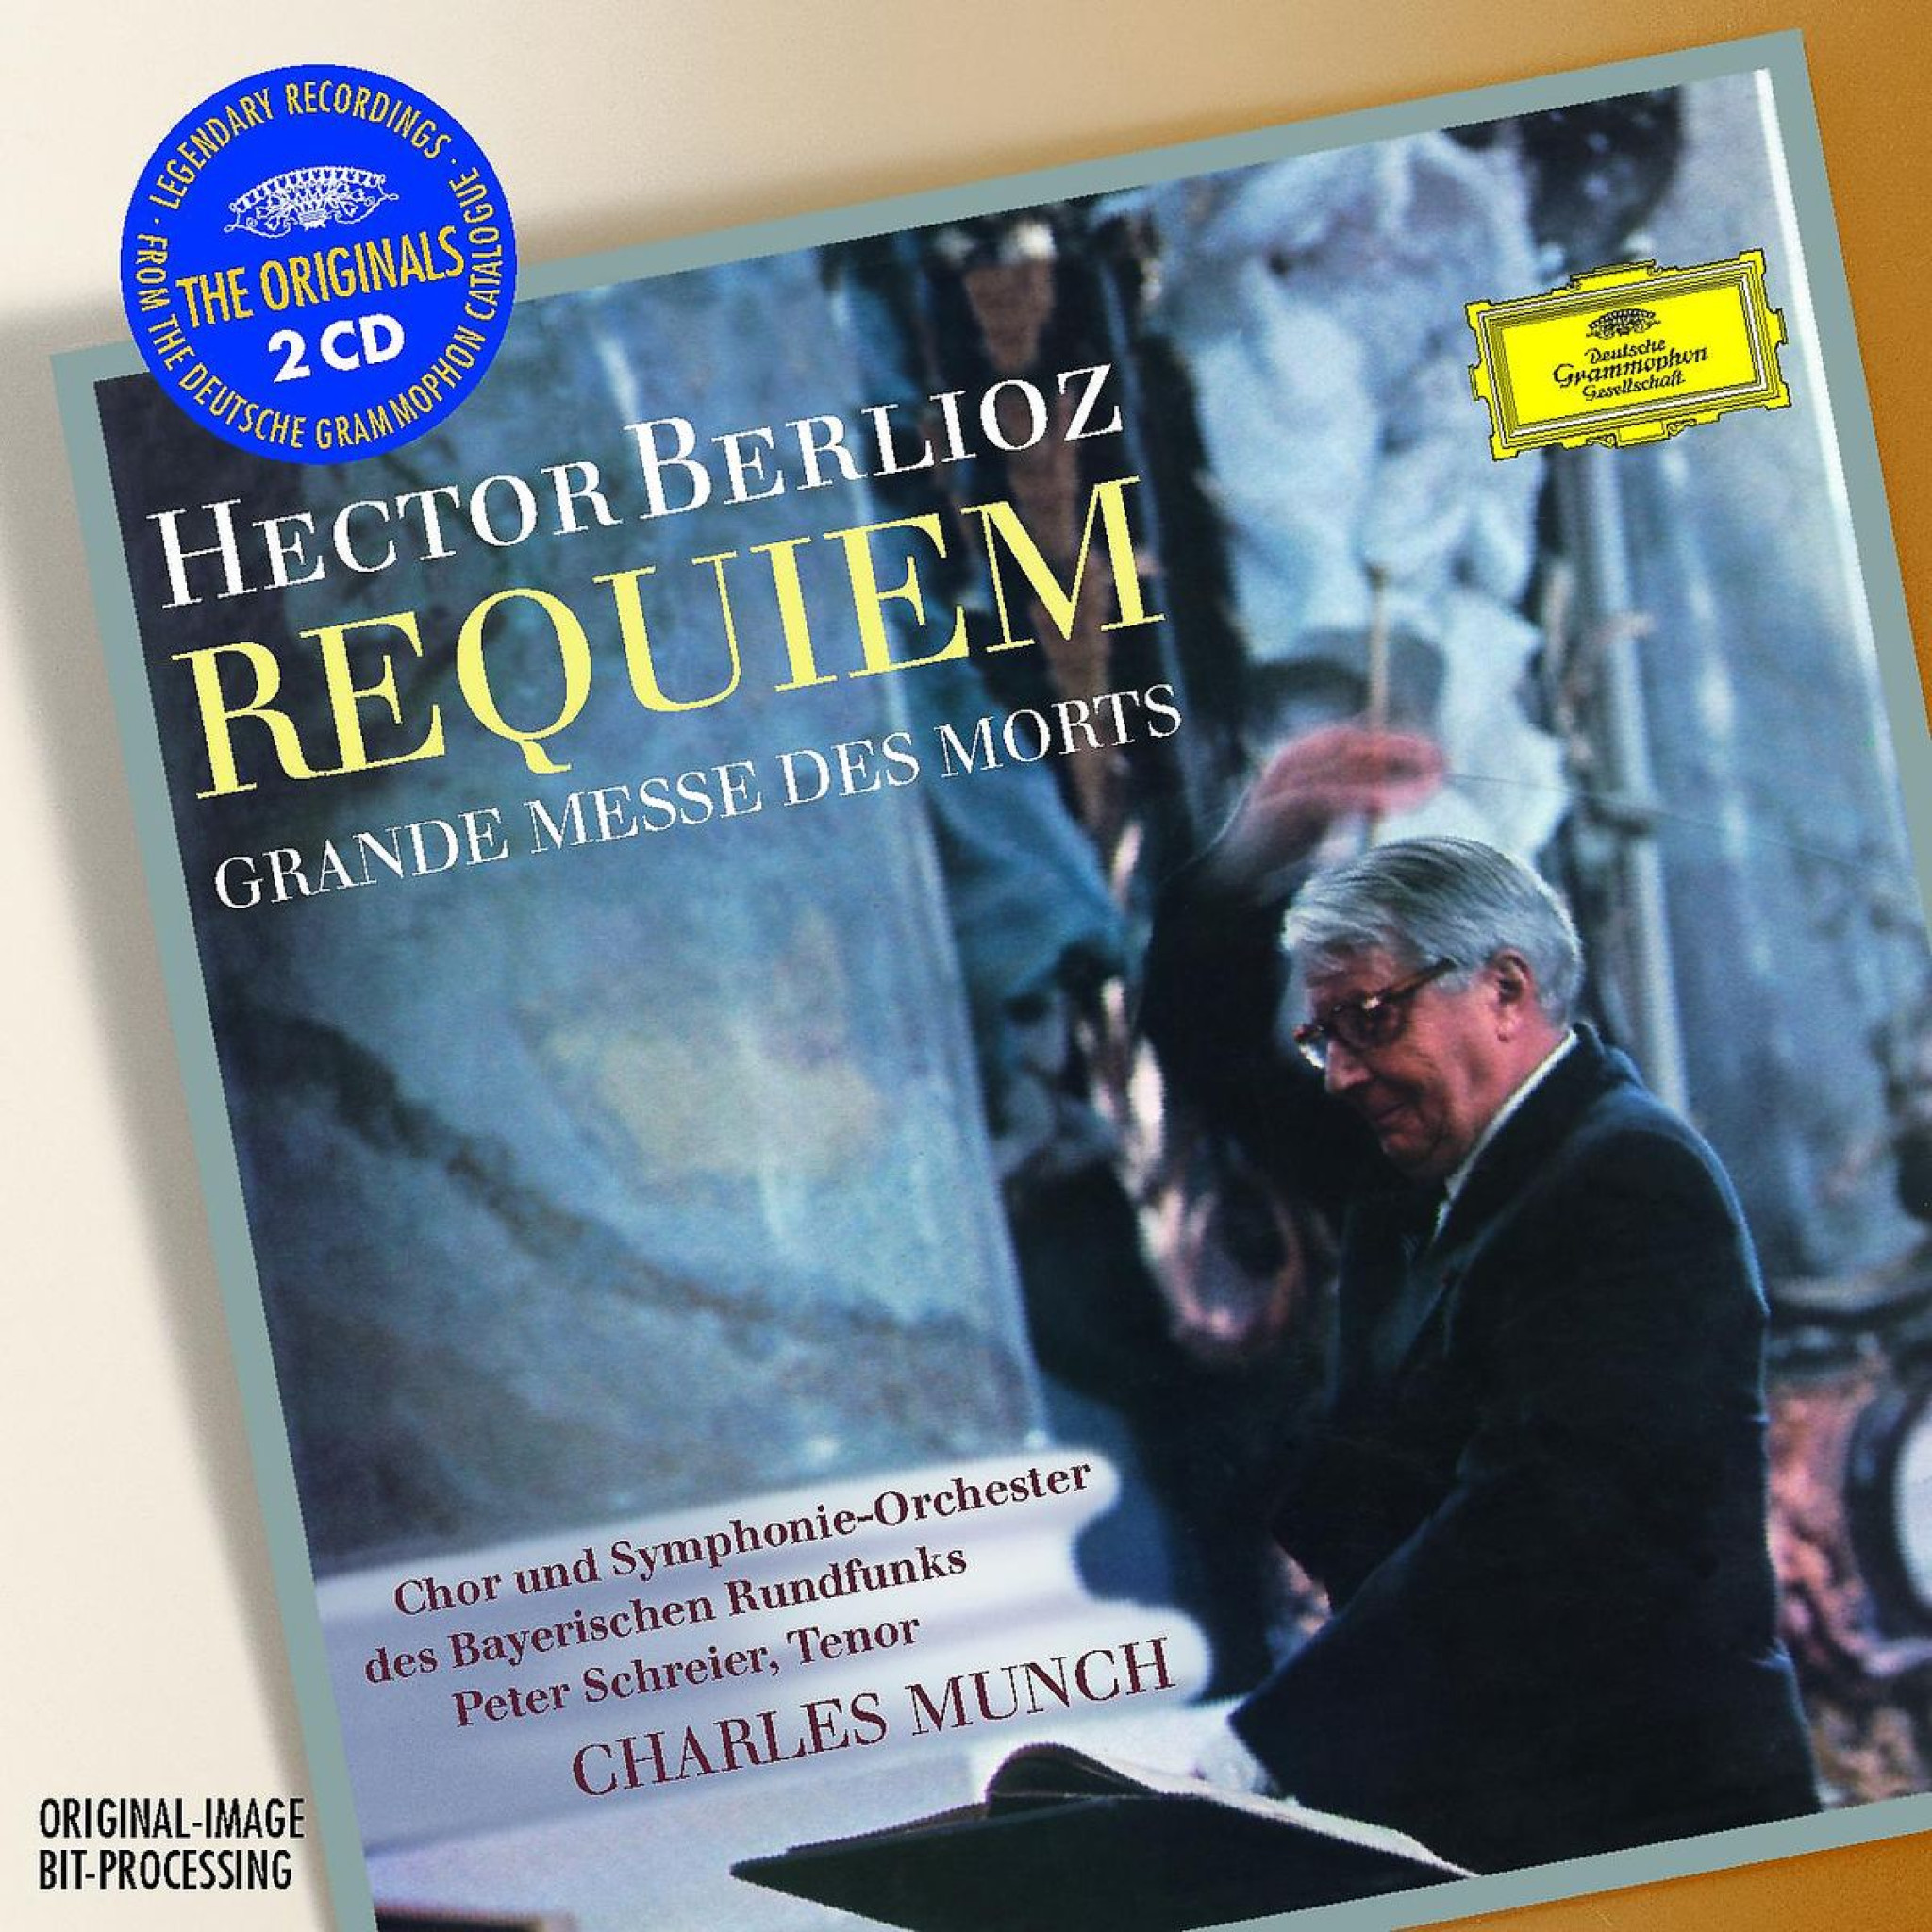 Berlioz: Requiem, Op.5 (Grande Messe des Morts) 0028947775614